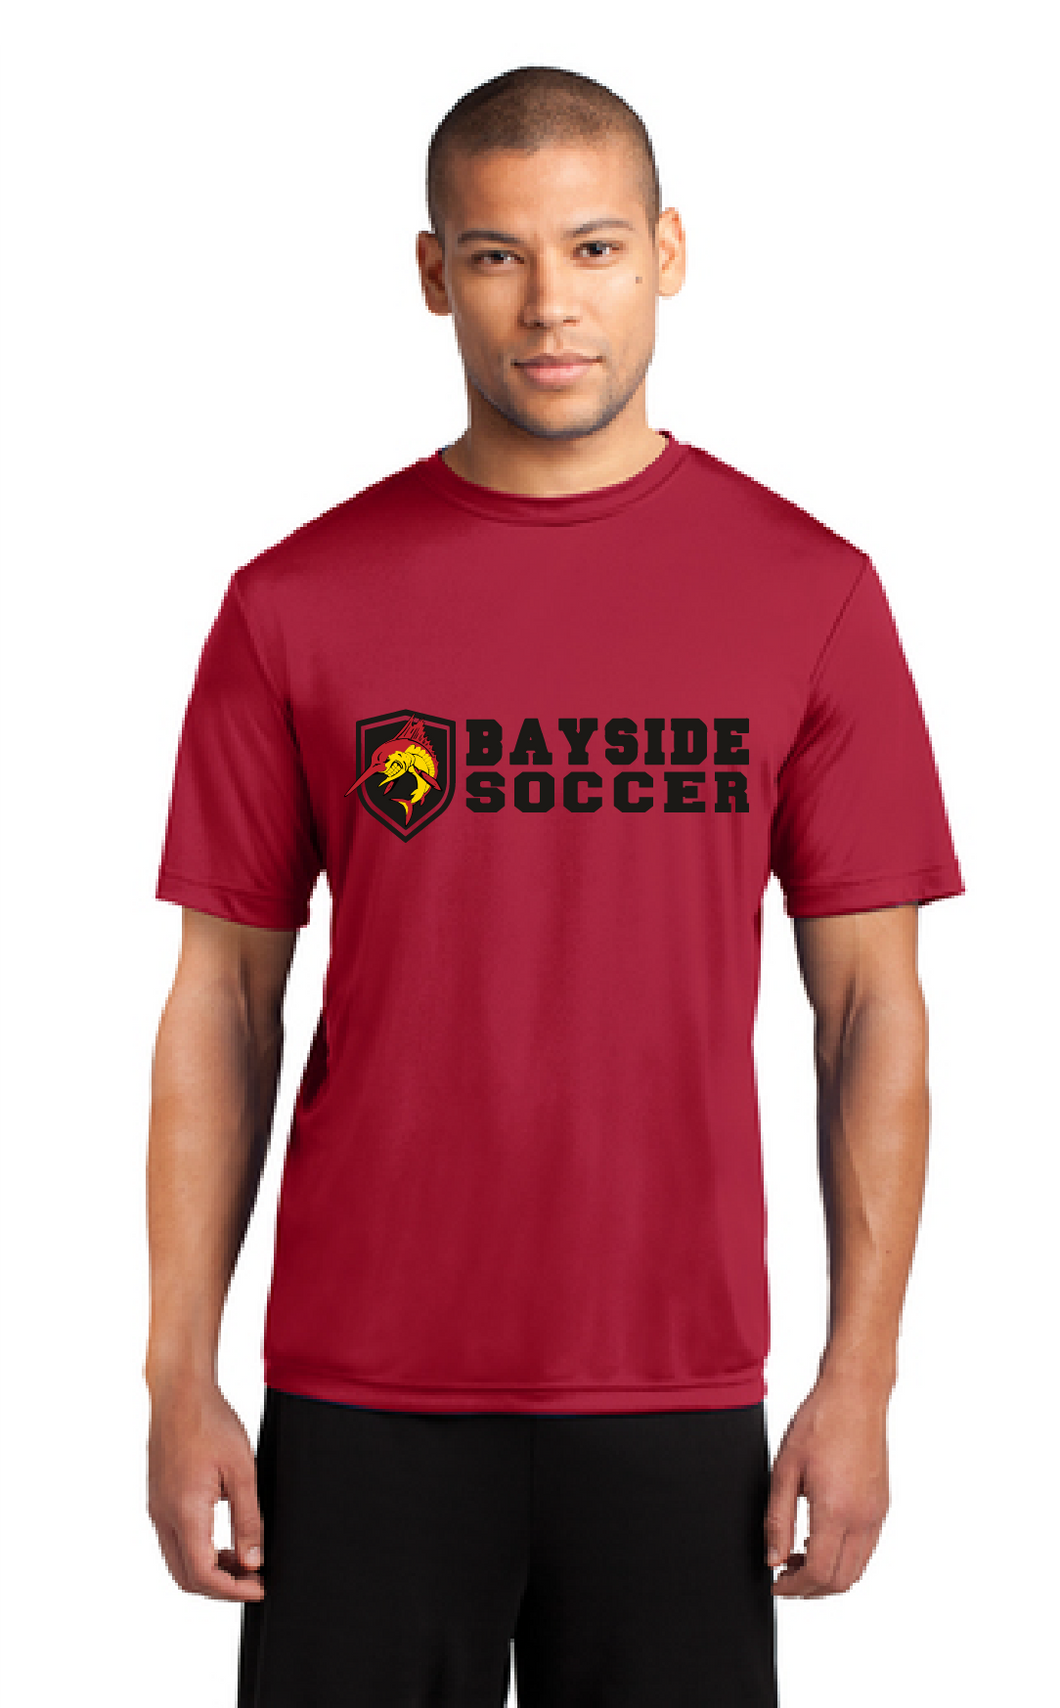 Performance Tee / Red / Bayside High School Men's Soccer